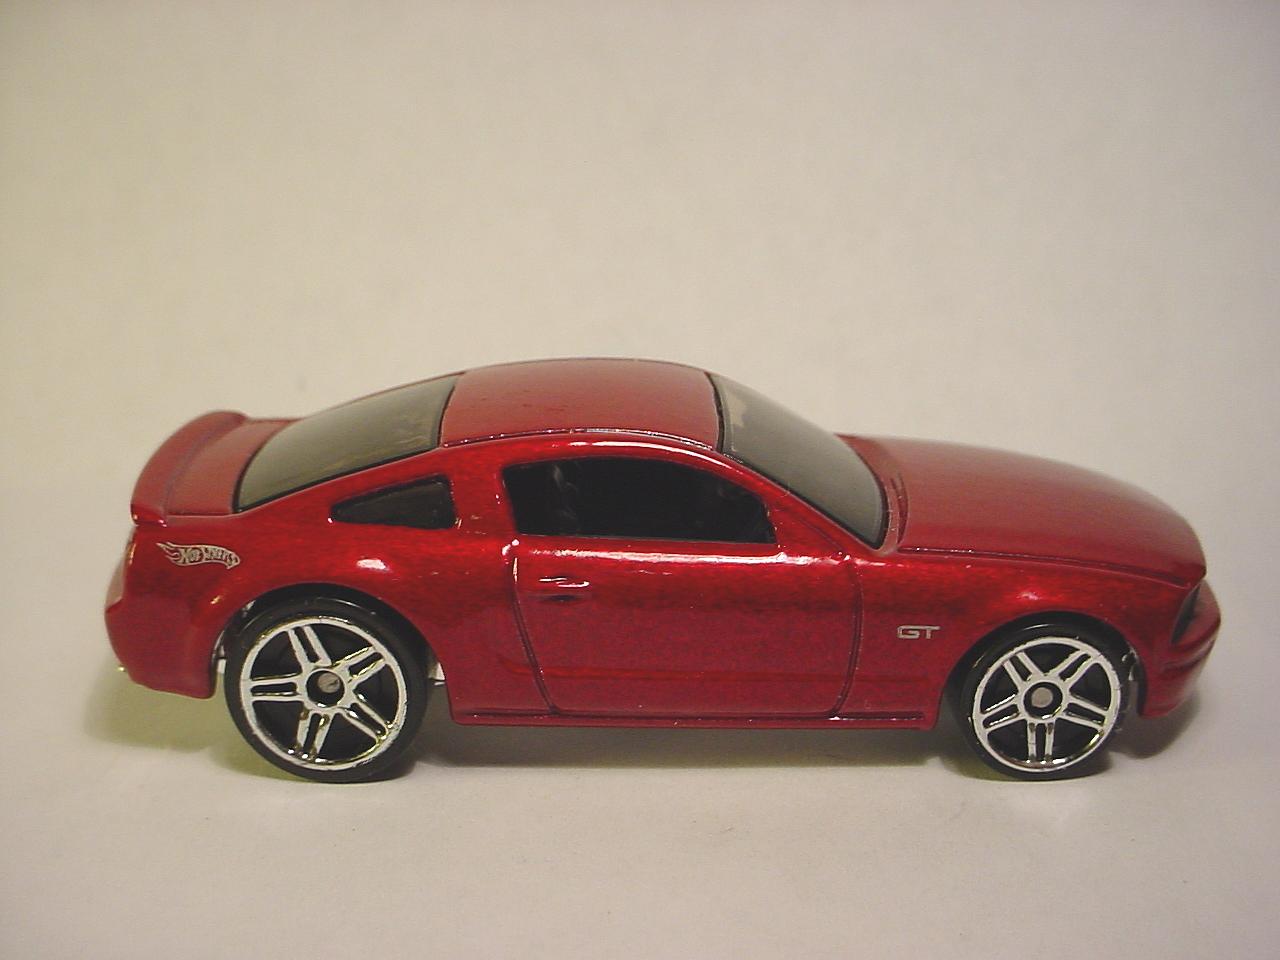 2005 Ford Mustang GT 06 | Hot Wheels Online Variation Guide Wiki | Fandom